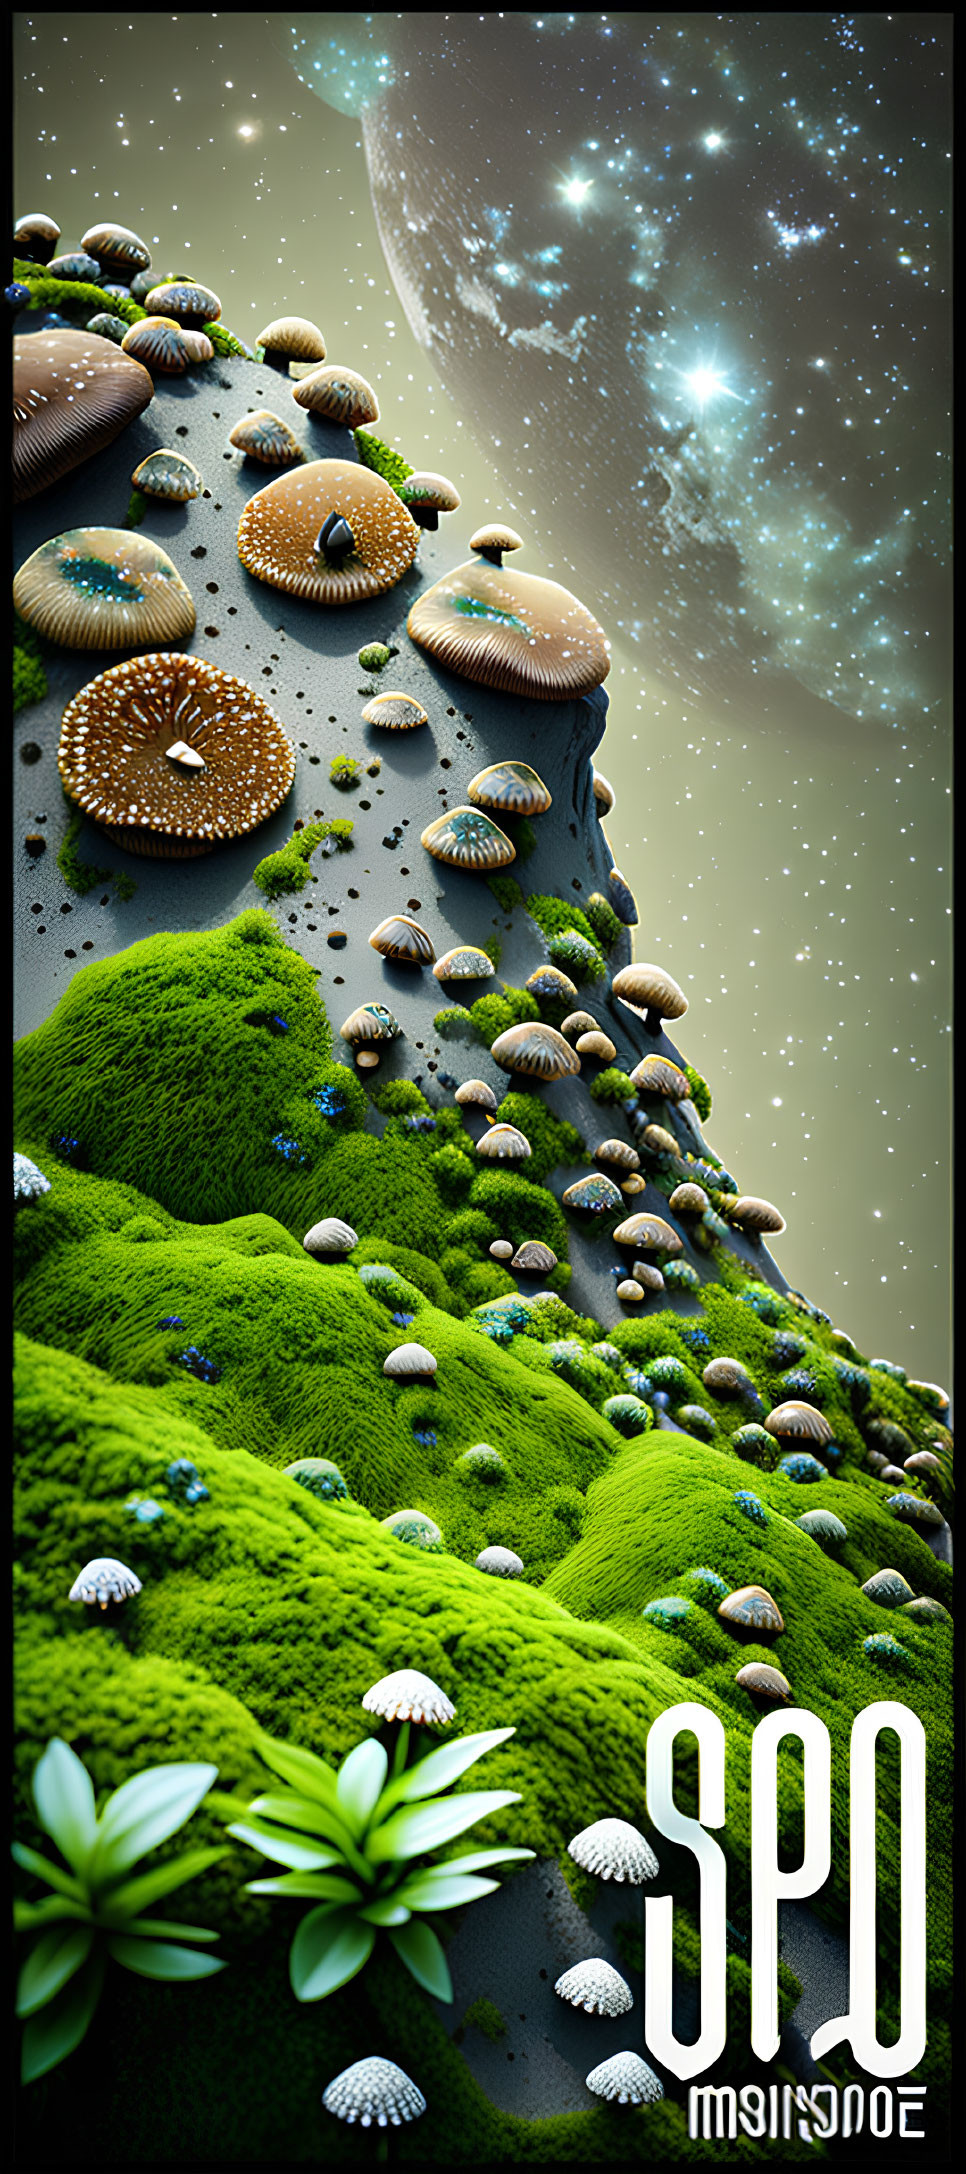 Fantastical mushroom structures on mossy terrain under starlit sky.